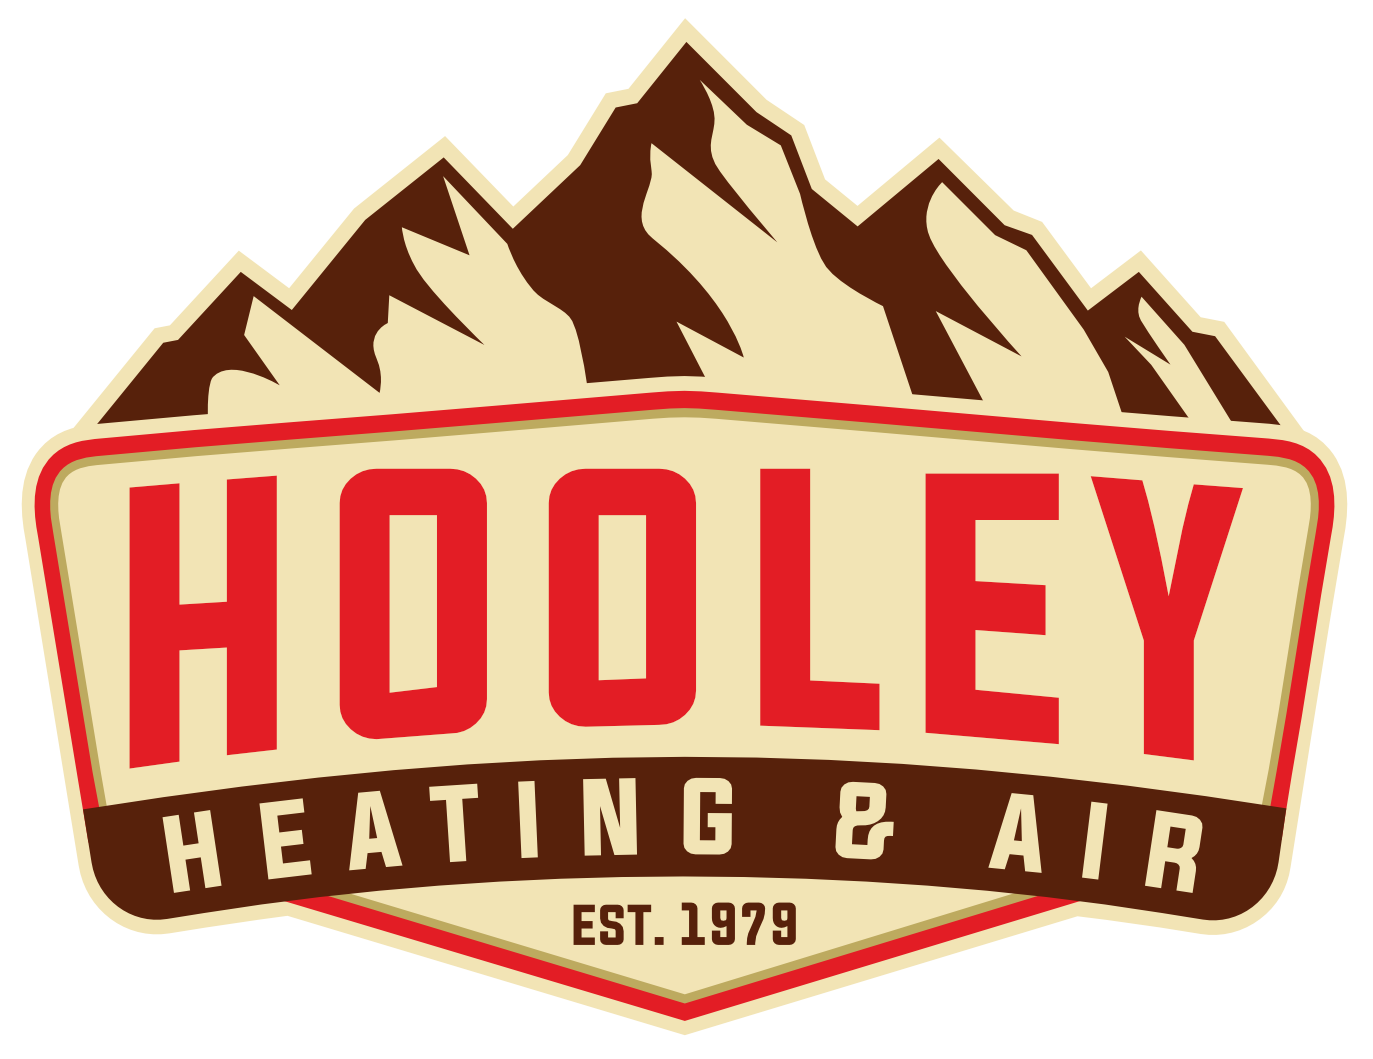 Hooley Heating & Air Conditioning Logo